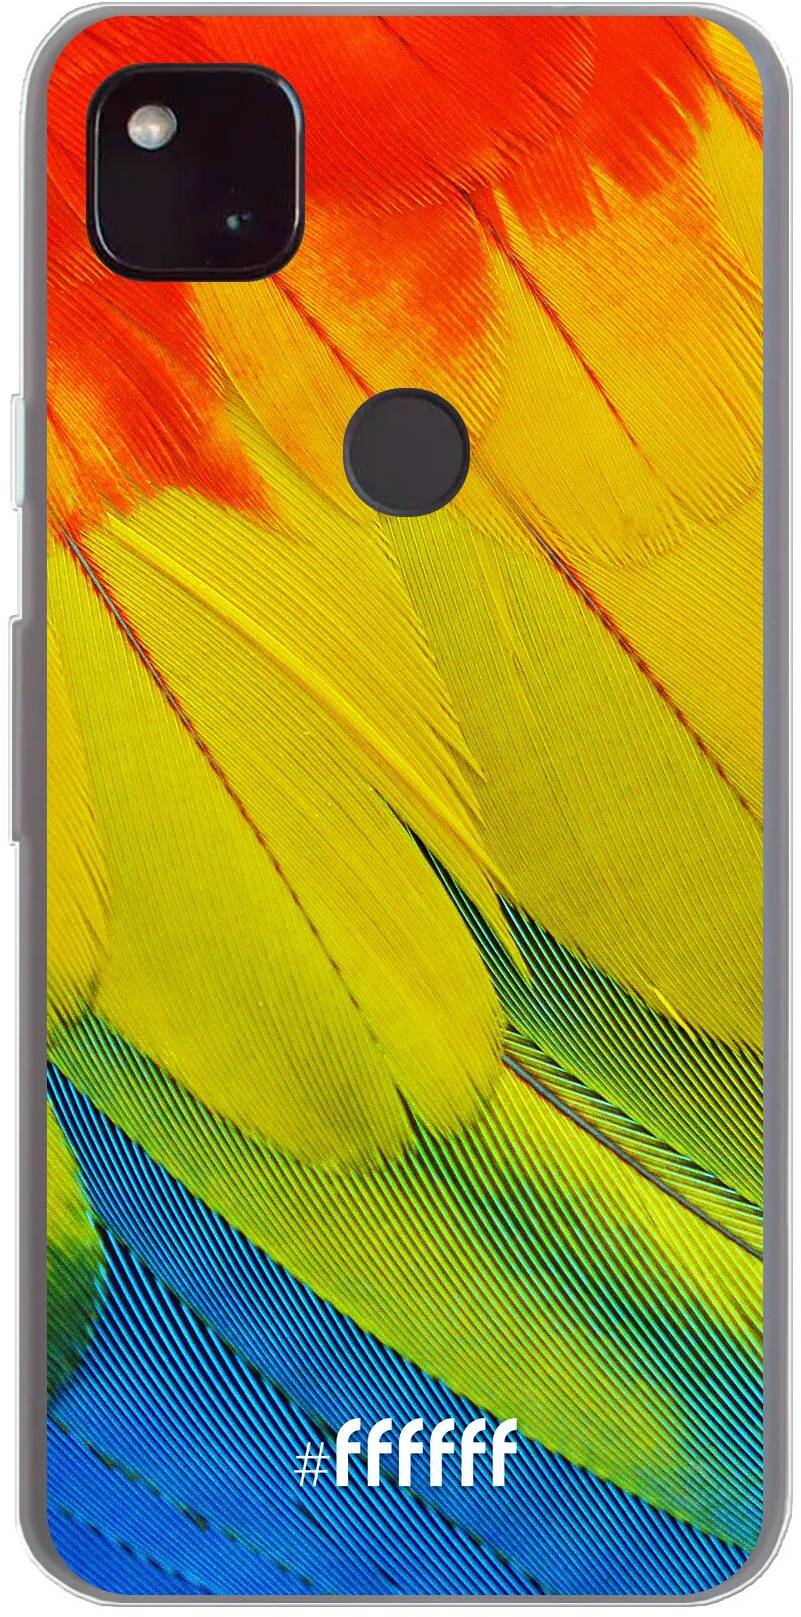 Macaw Hues Pixel 4a 5G